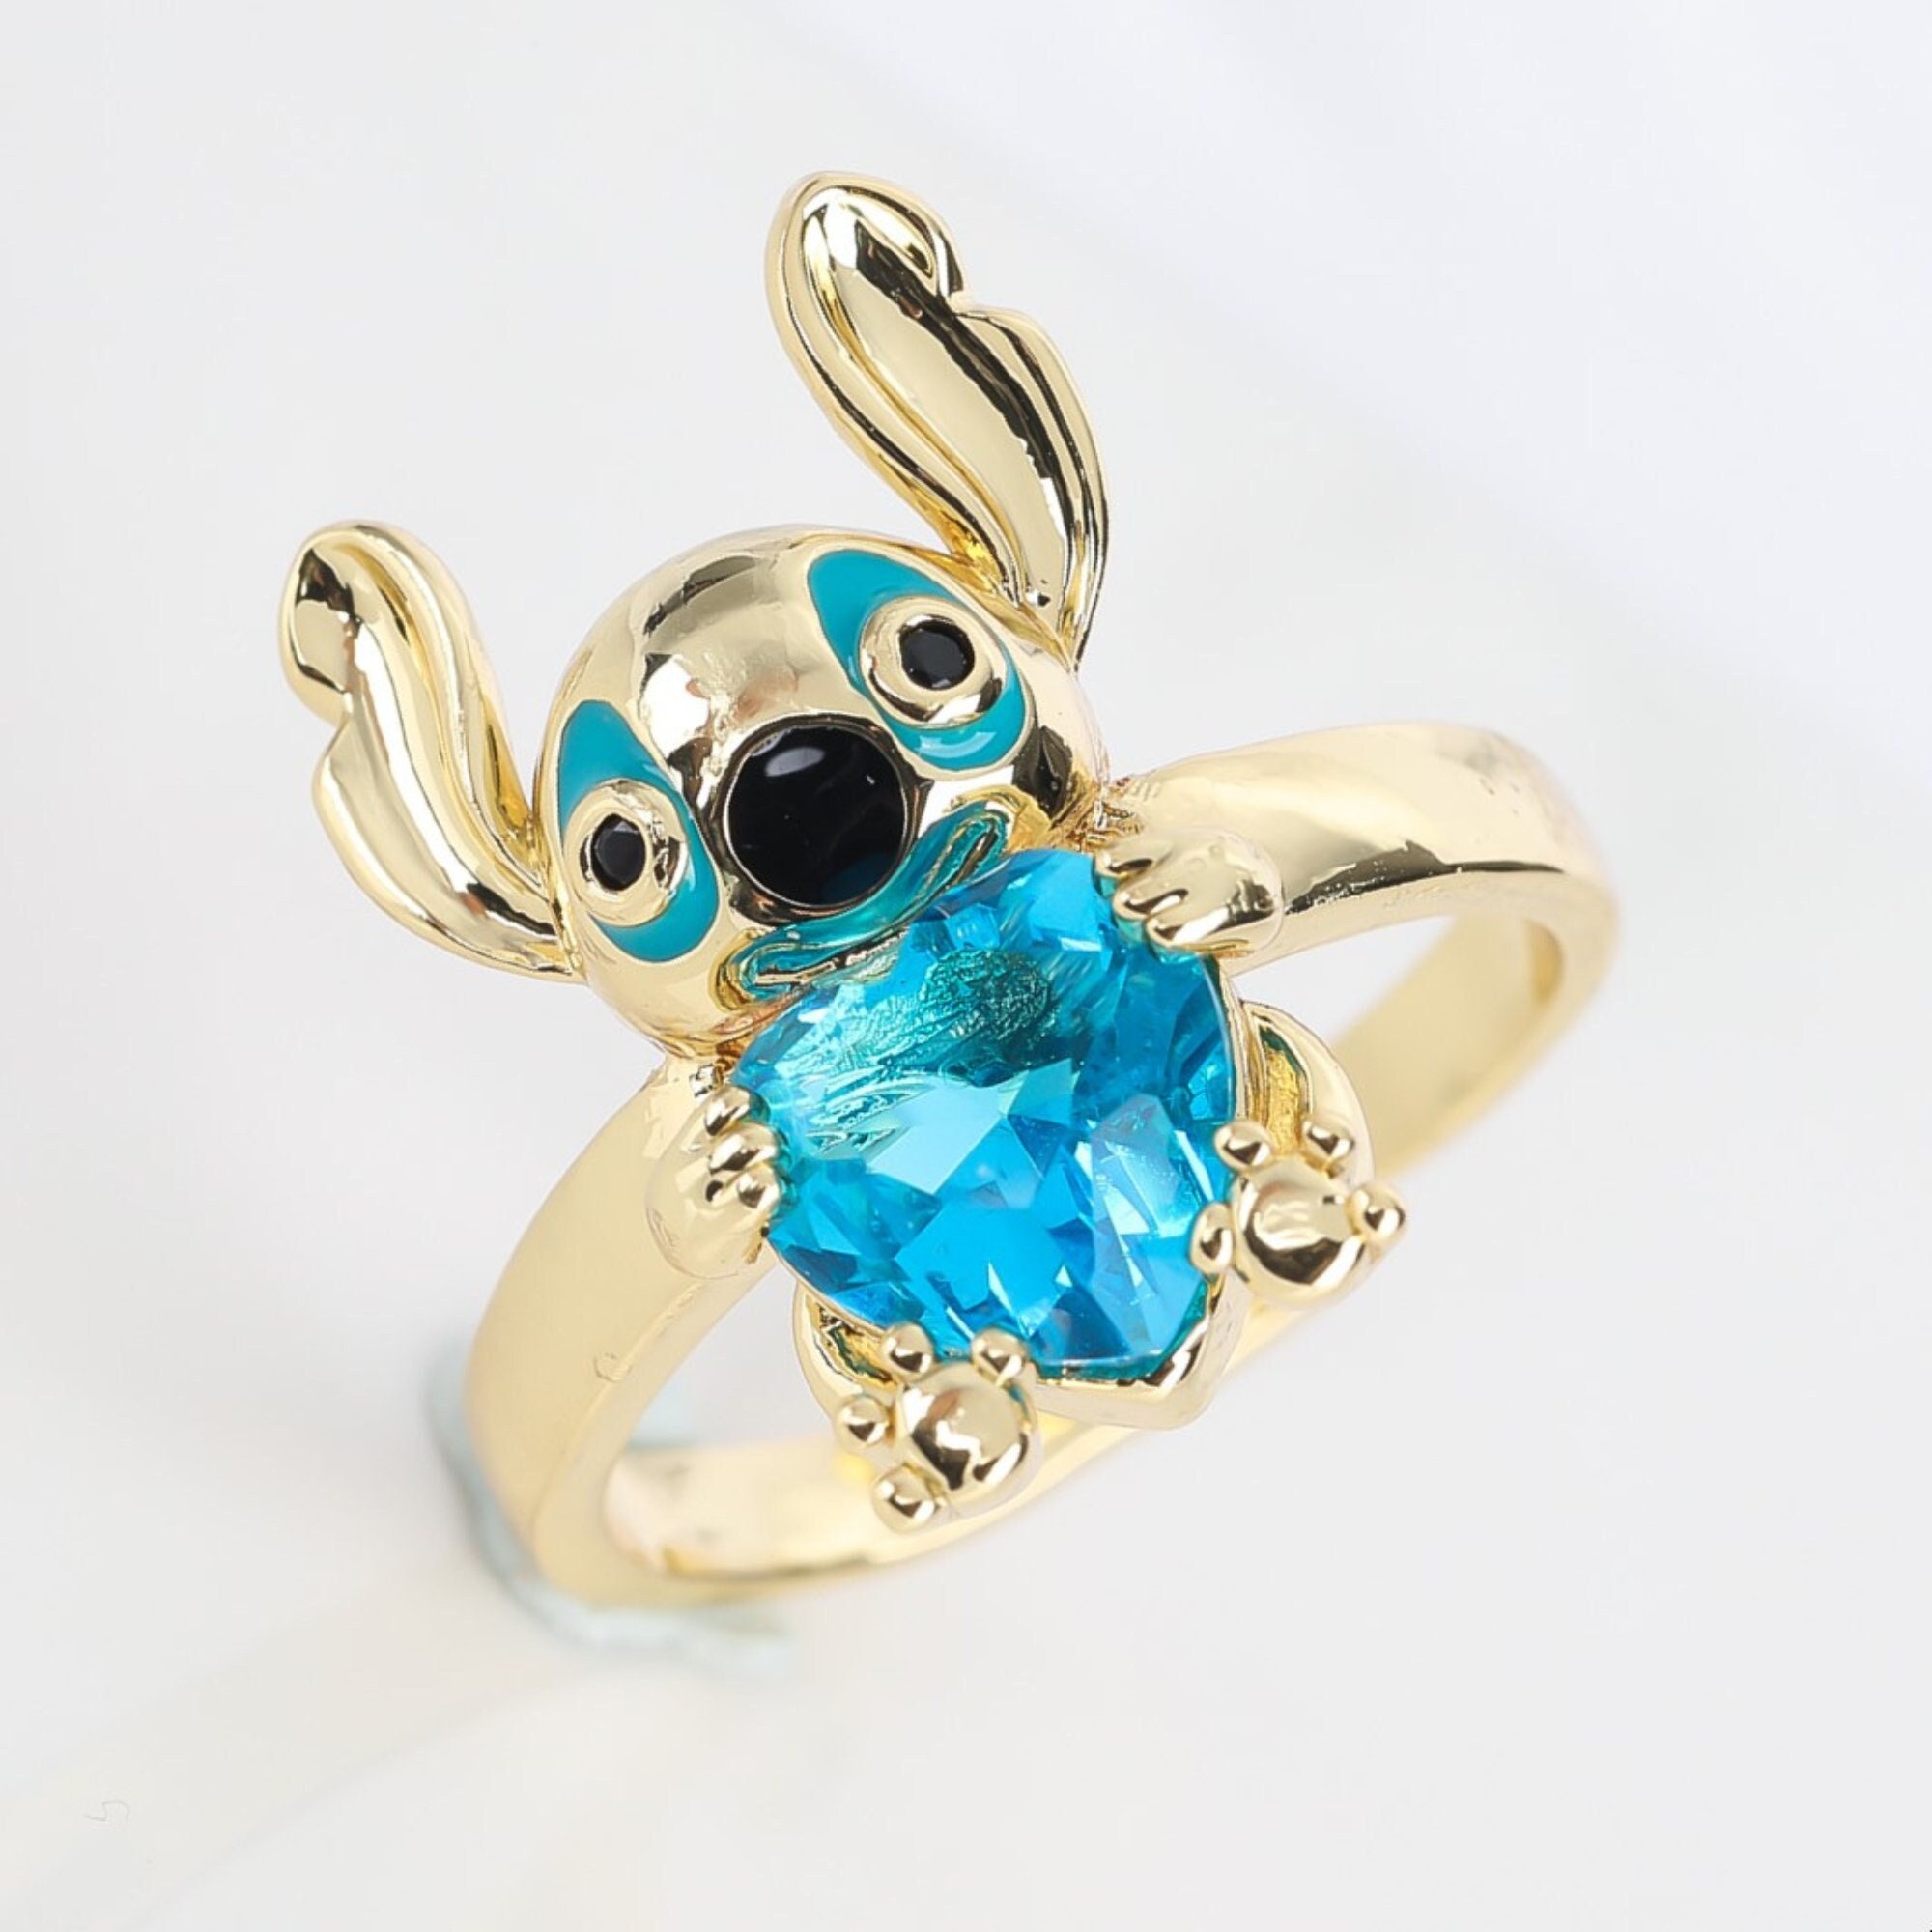 Stitch custom made figure as engagement ring box. — Steemit